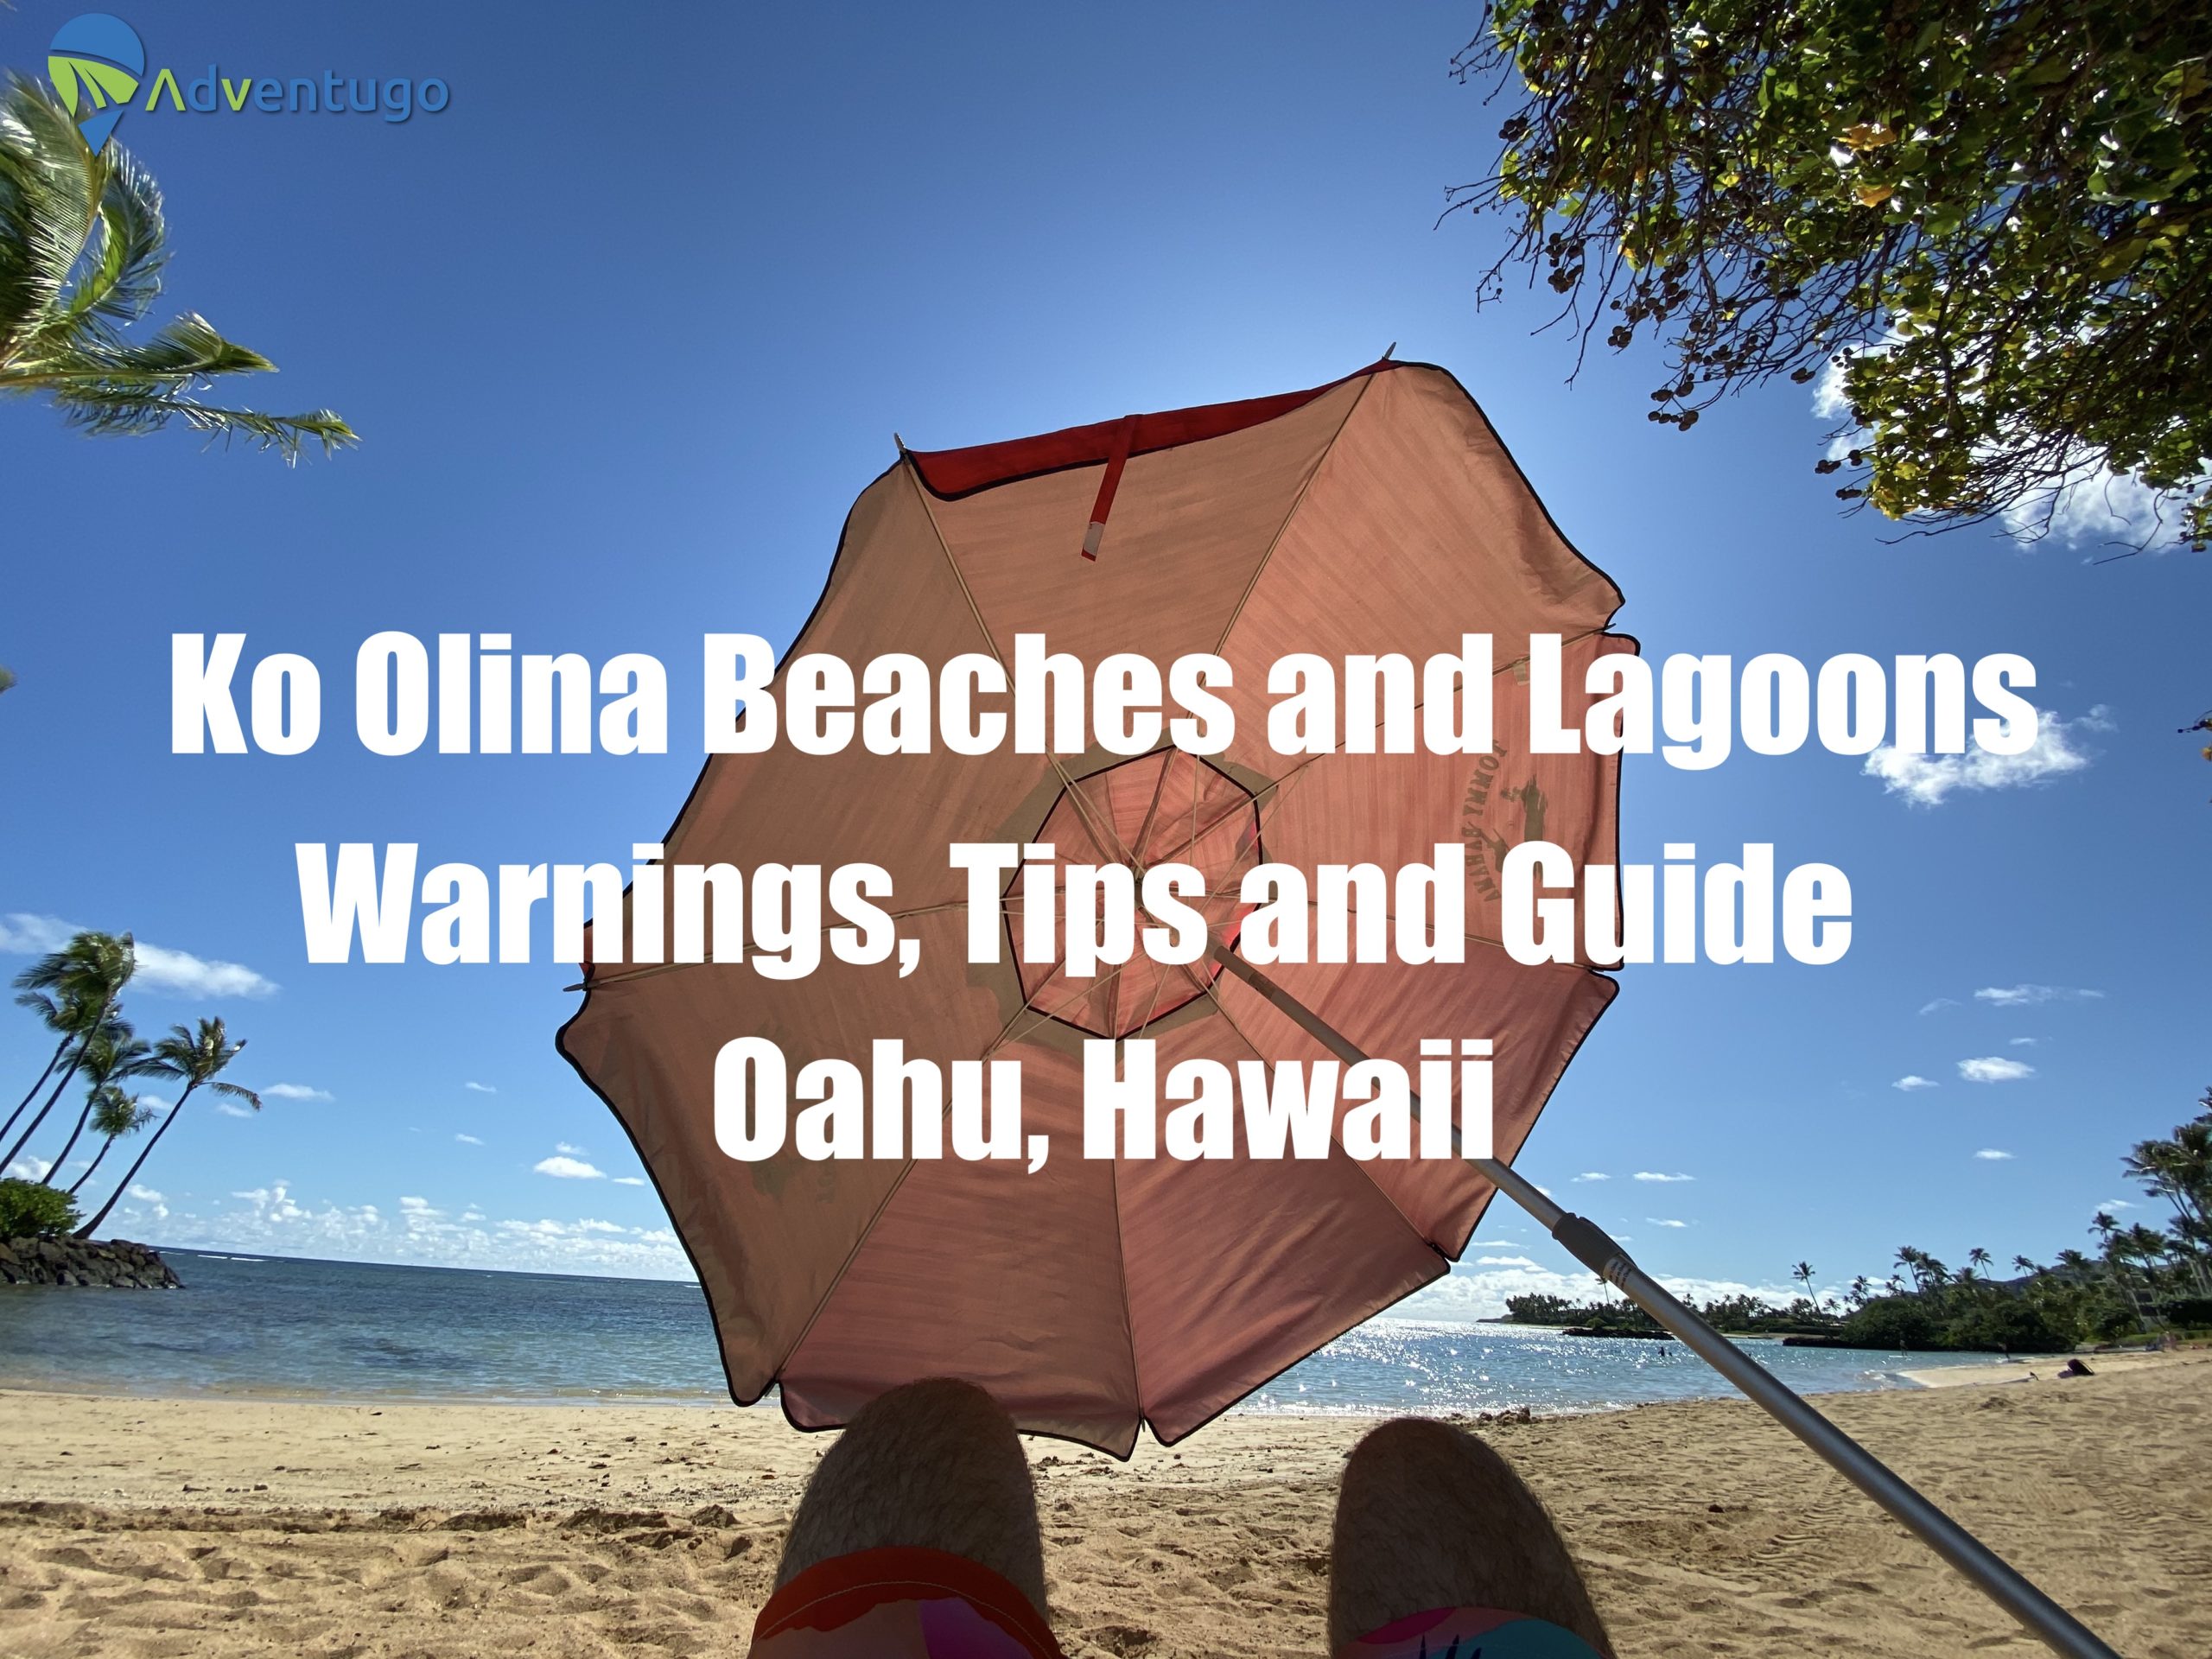 Ko Olina Beaches and Lagoons guide, Warnings and tips Oahu